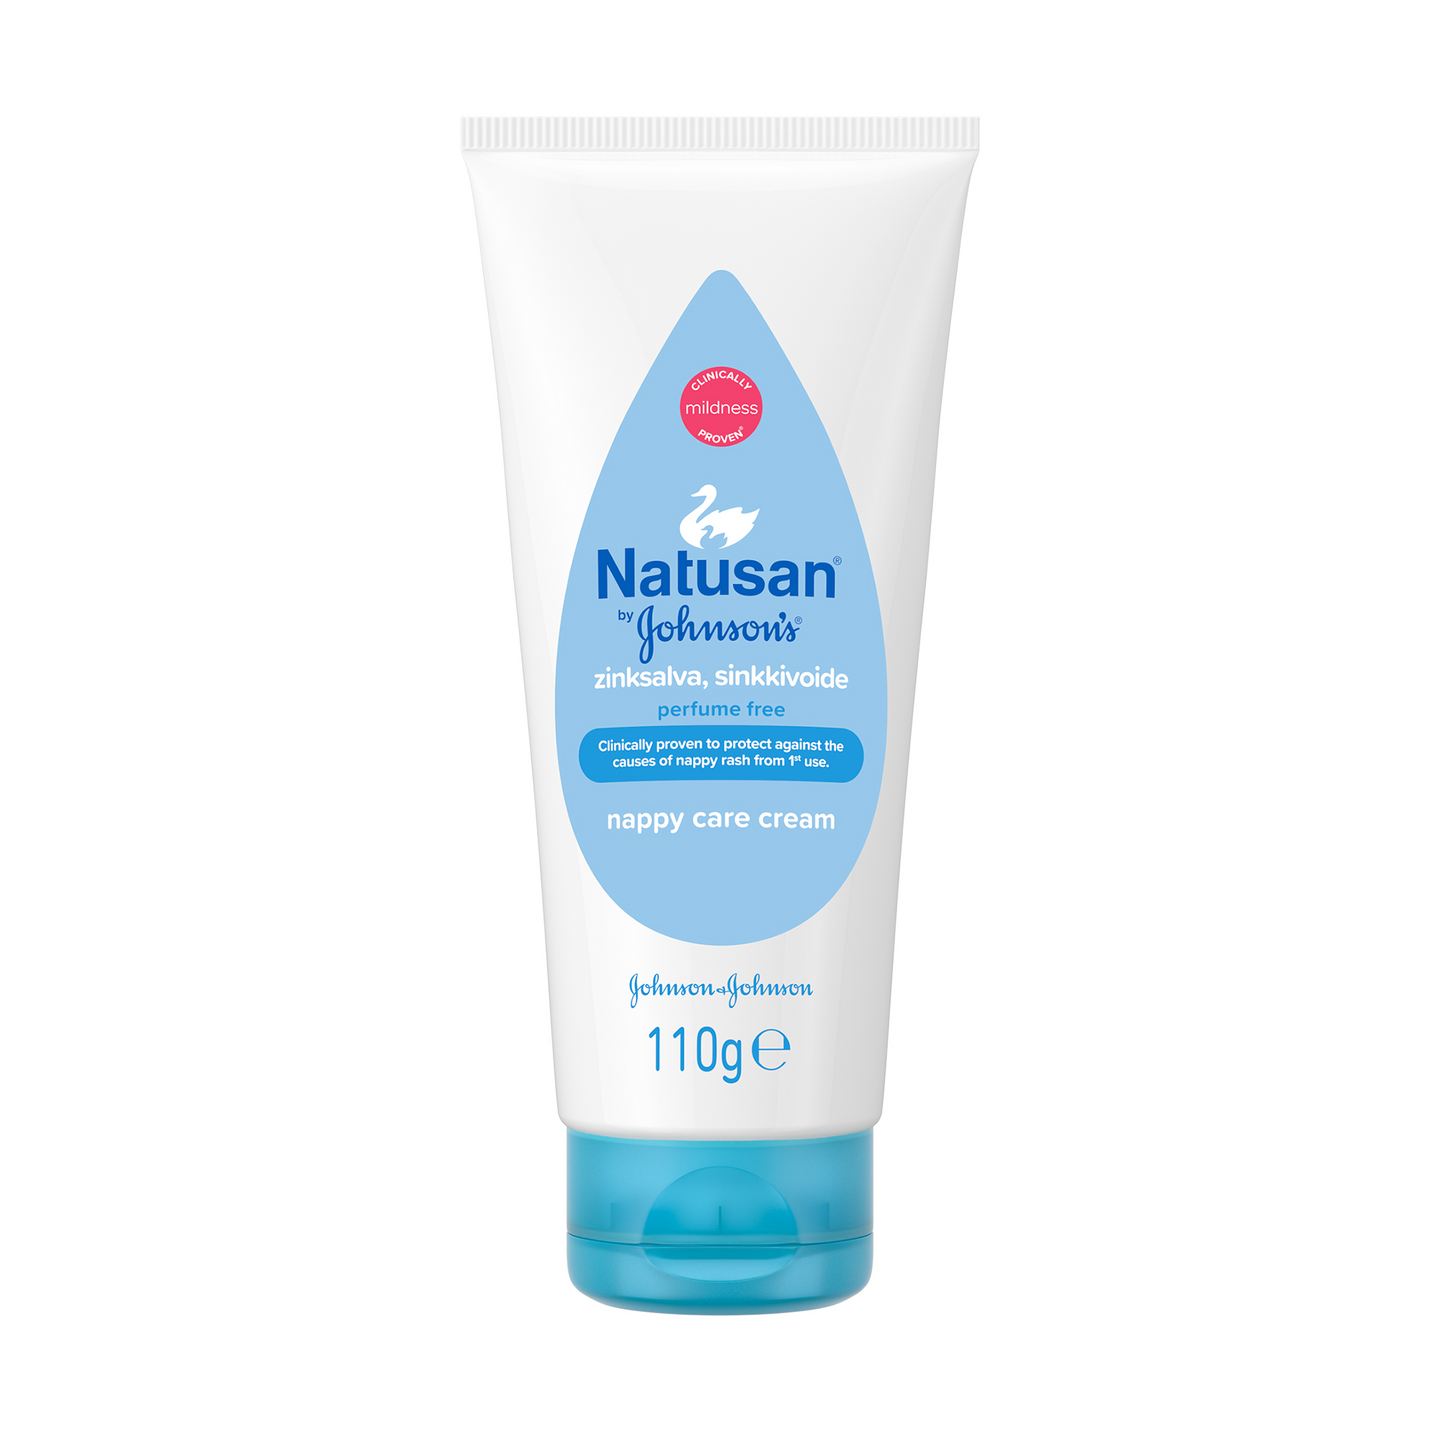 Natusan by Johnson's 3in1 Nappy Care Cream sinkkivoide 110g